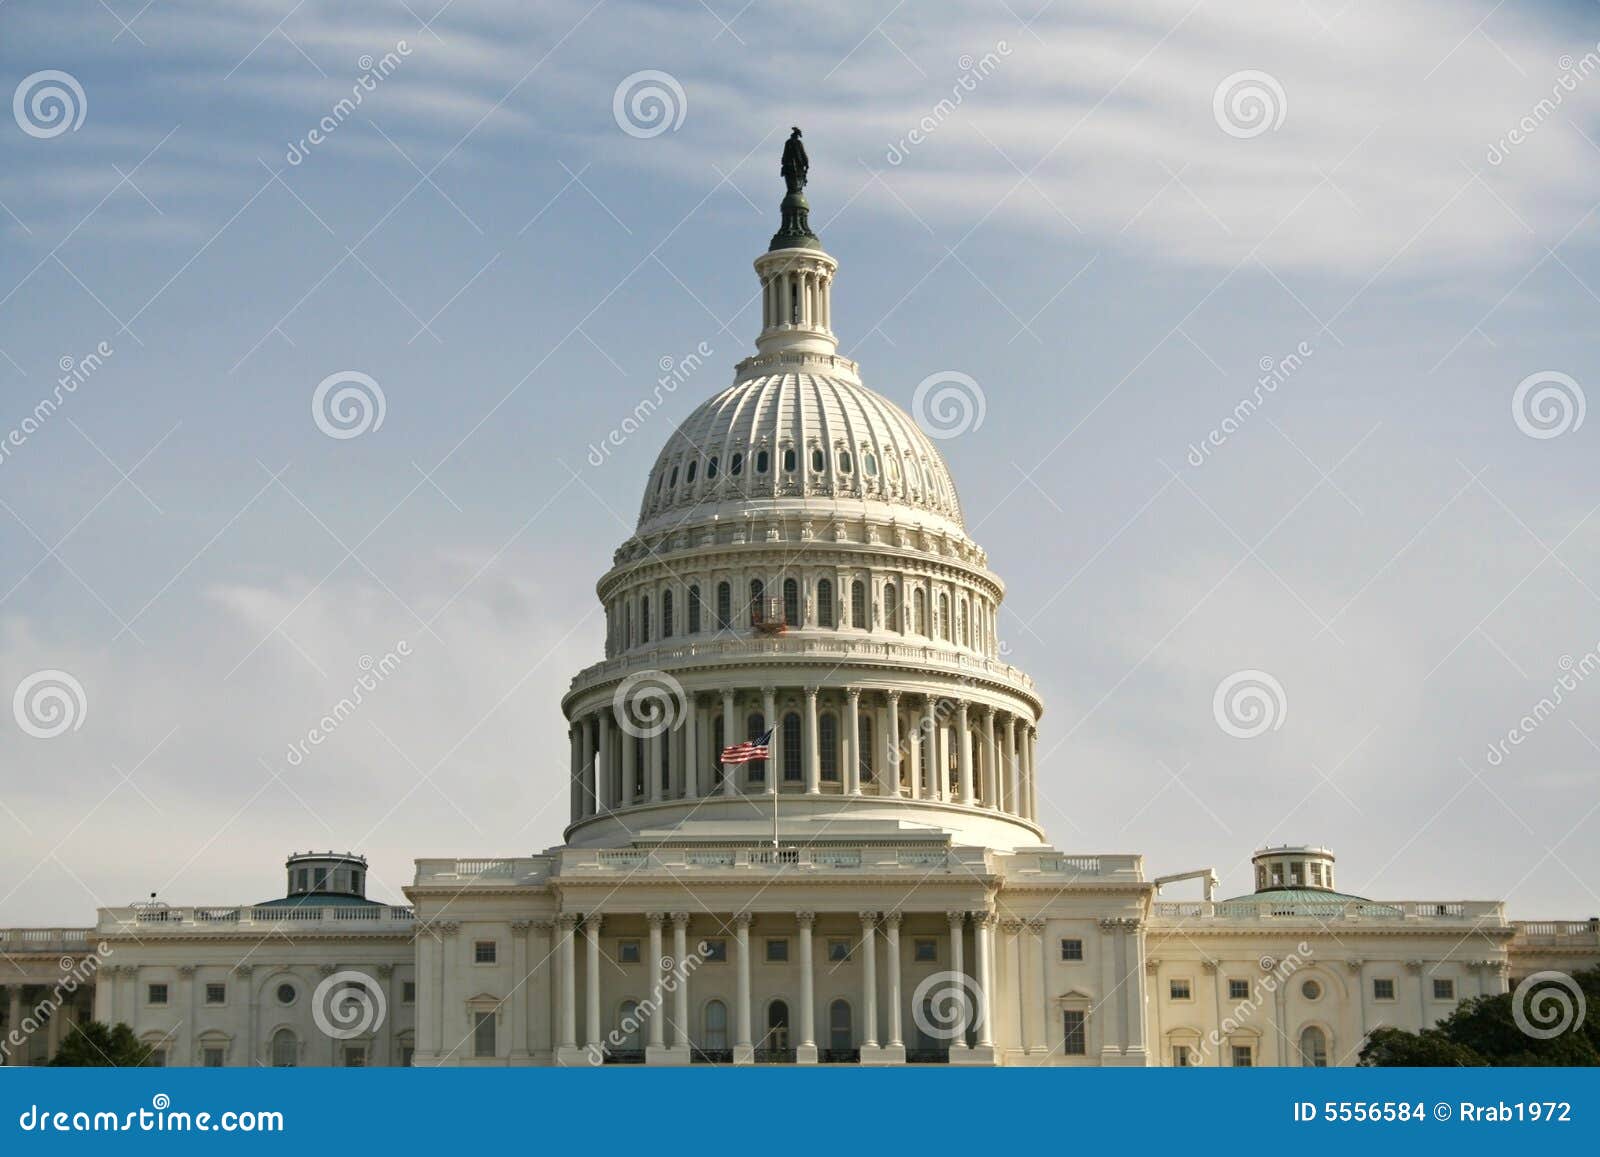 america house of representatives capitol hill building